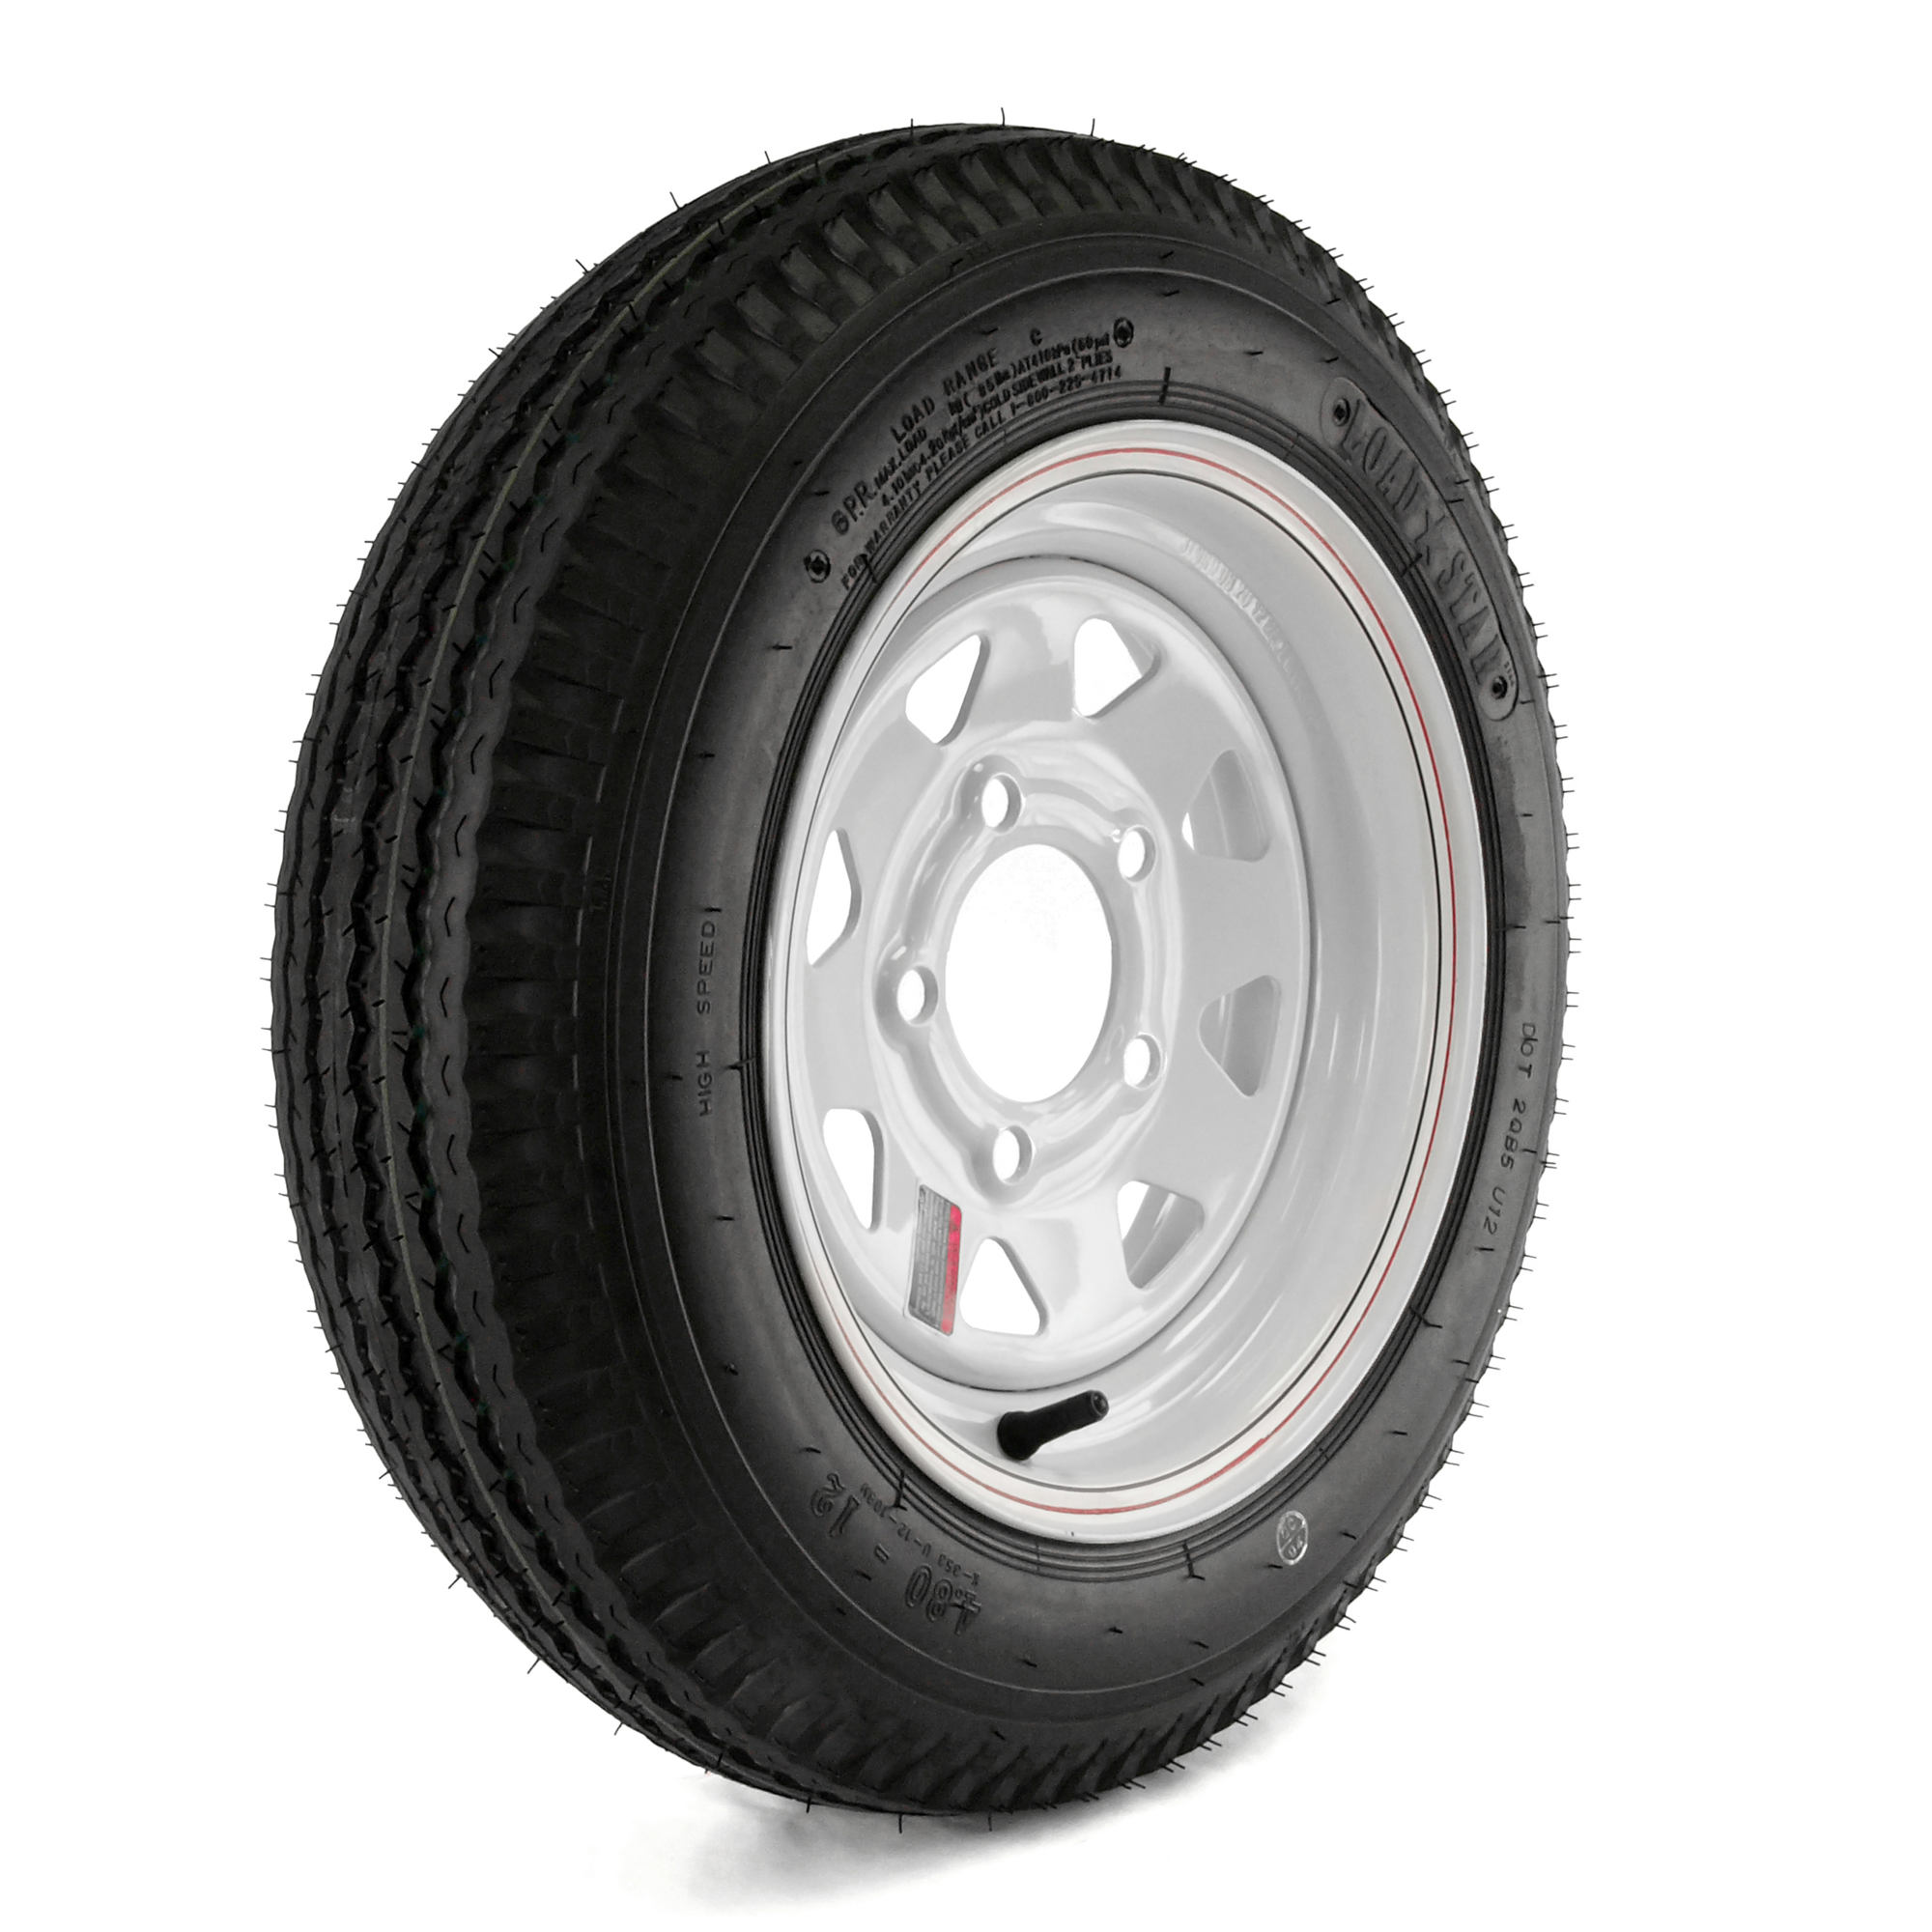 Kenda Loadstar 12Inch Bias-Ply Trailer Tire and Wheel Assembly â 480-12, 5-Hole, Load Range C, Model DM412C-5C-IN